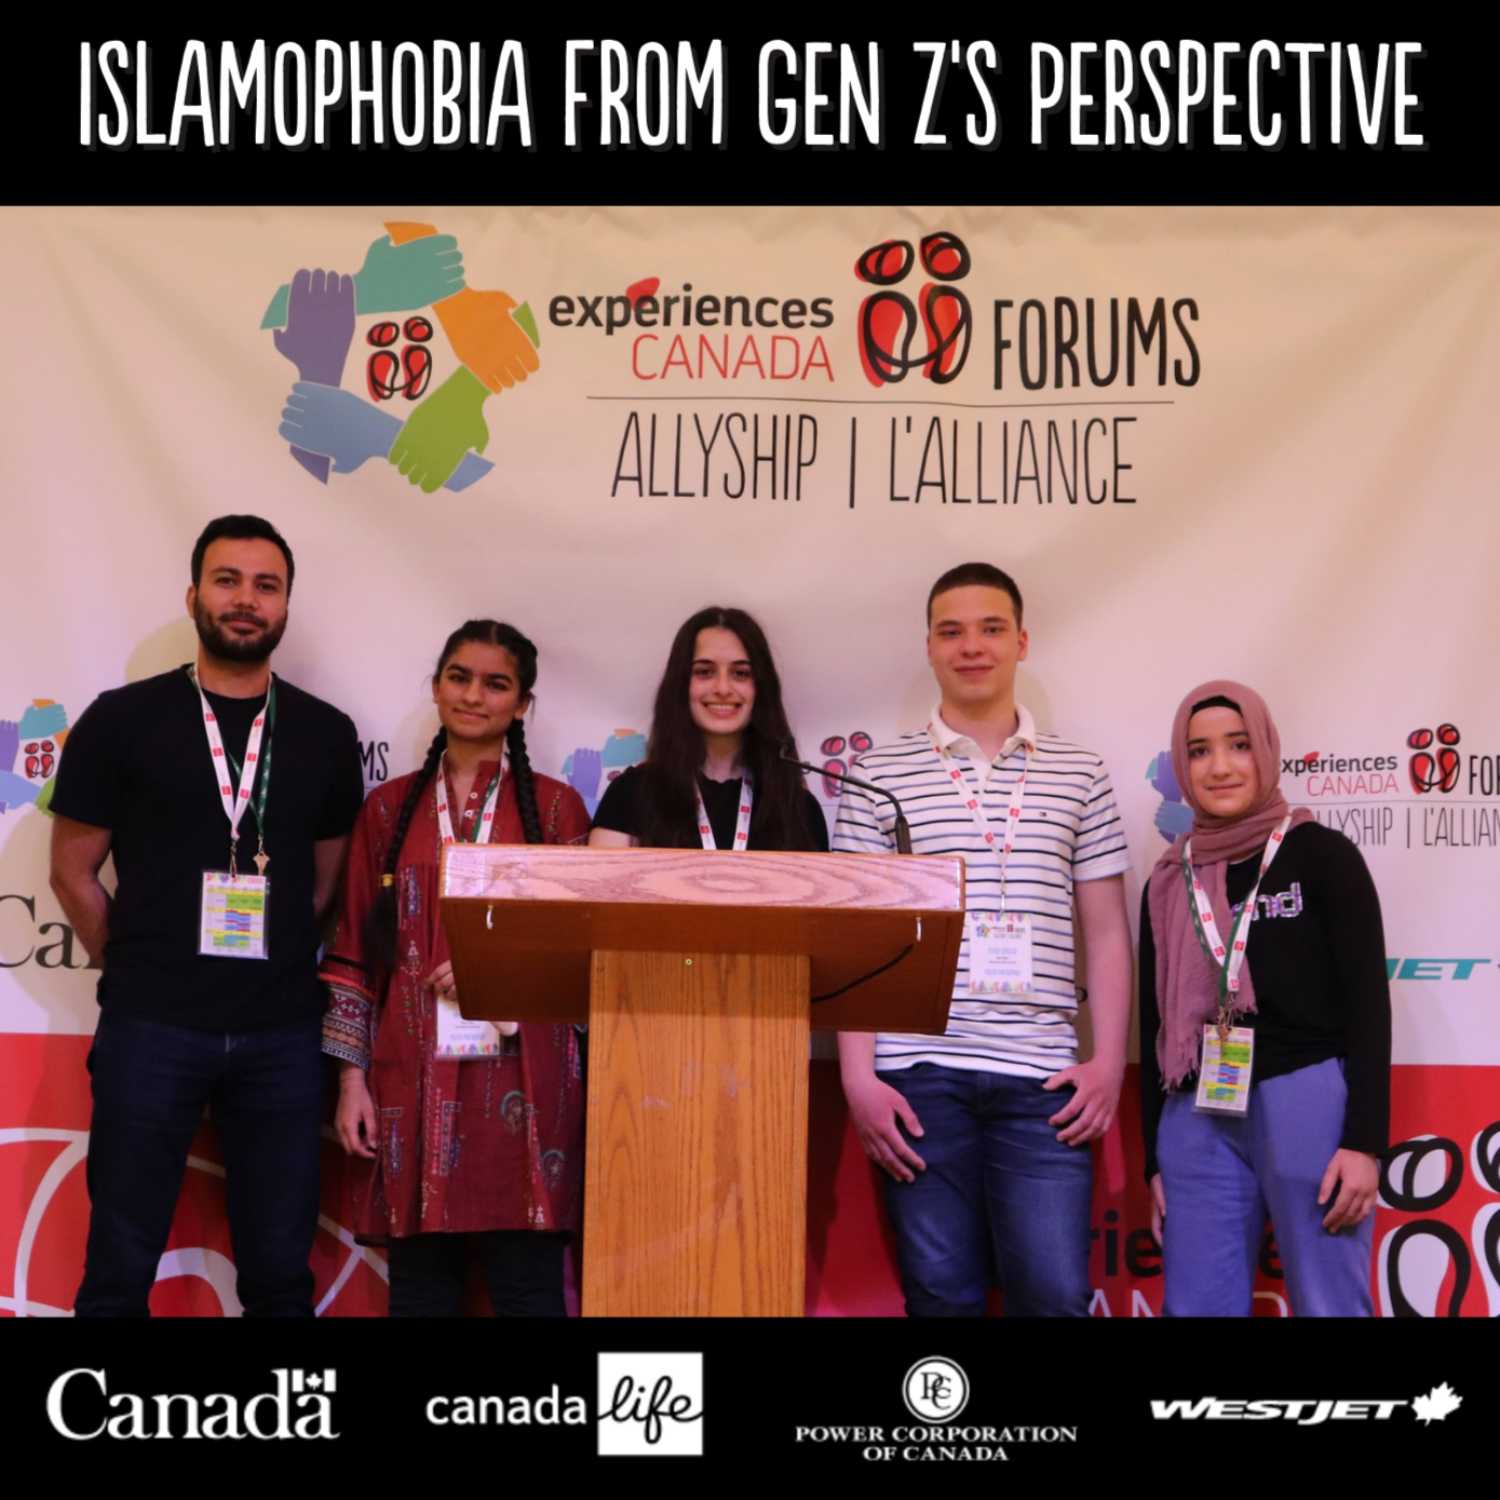 Islamophobia From Gen Z's Perspective